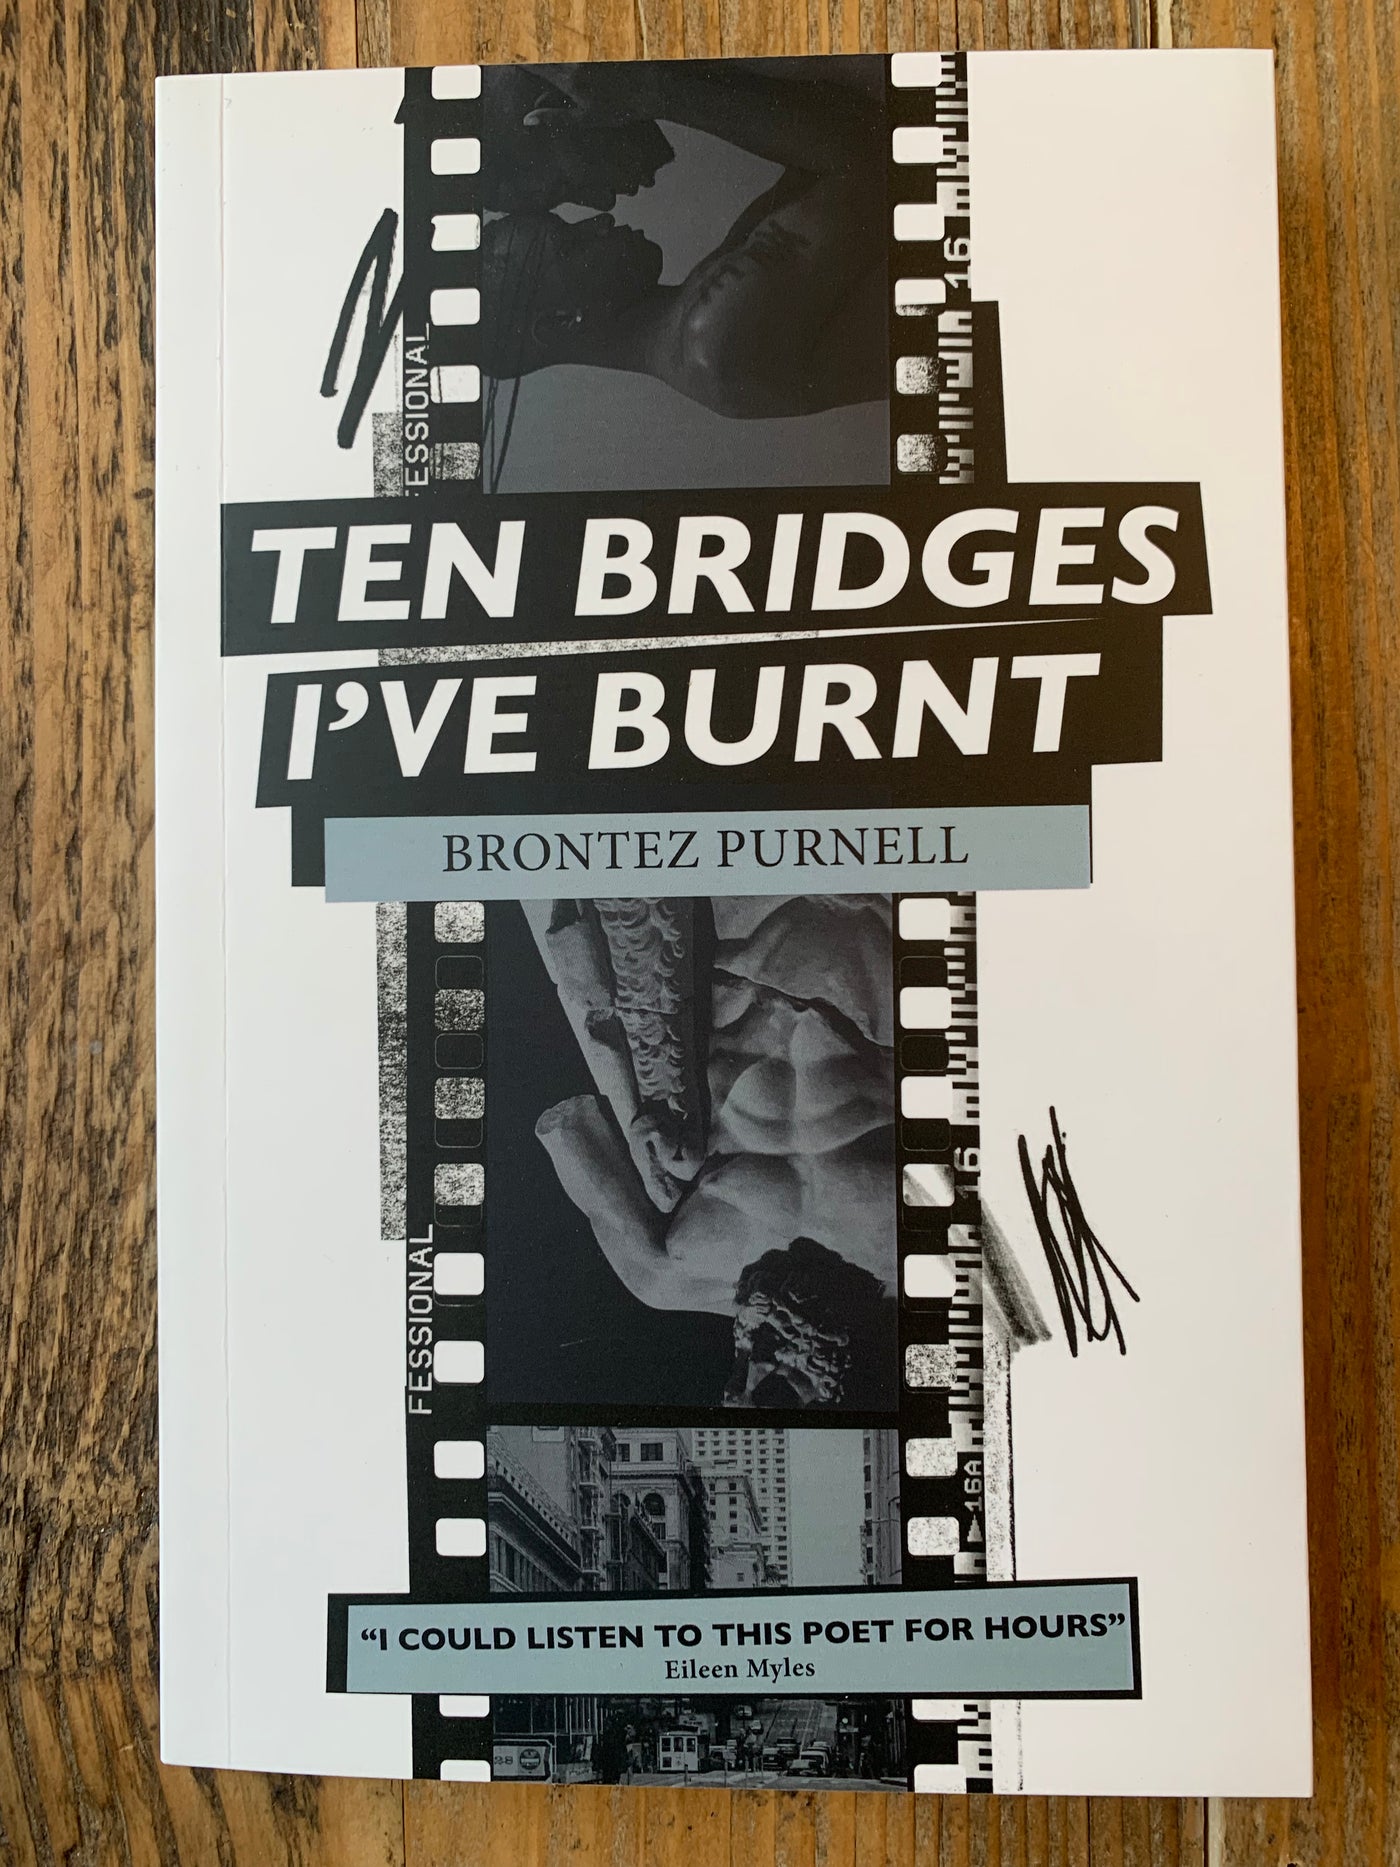 Ten Bridges I've Burnt